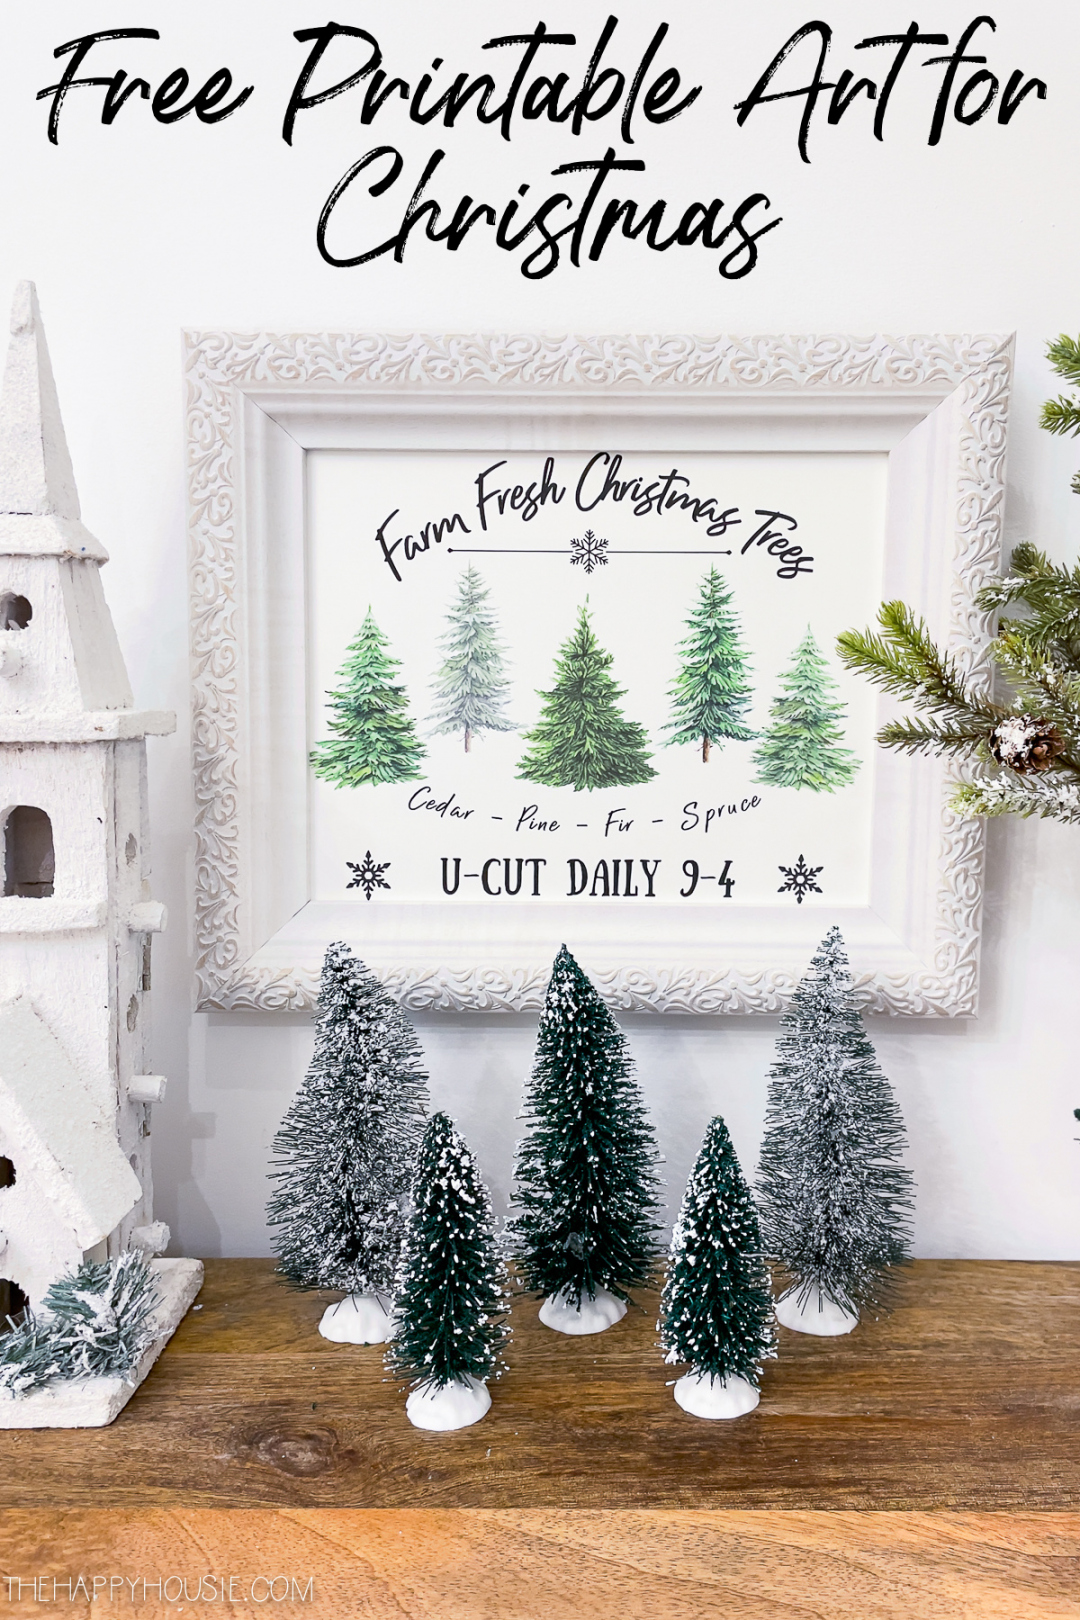 Free Printable Christmas Images - Printable - Free Christmas Printables for Thrifty Holiday Decorating  The